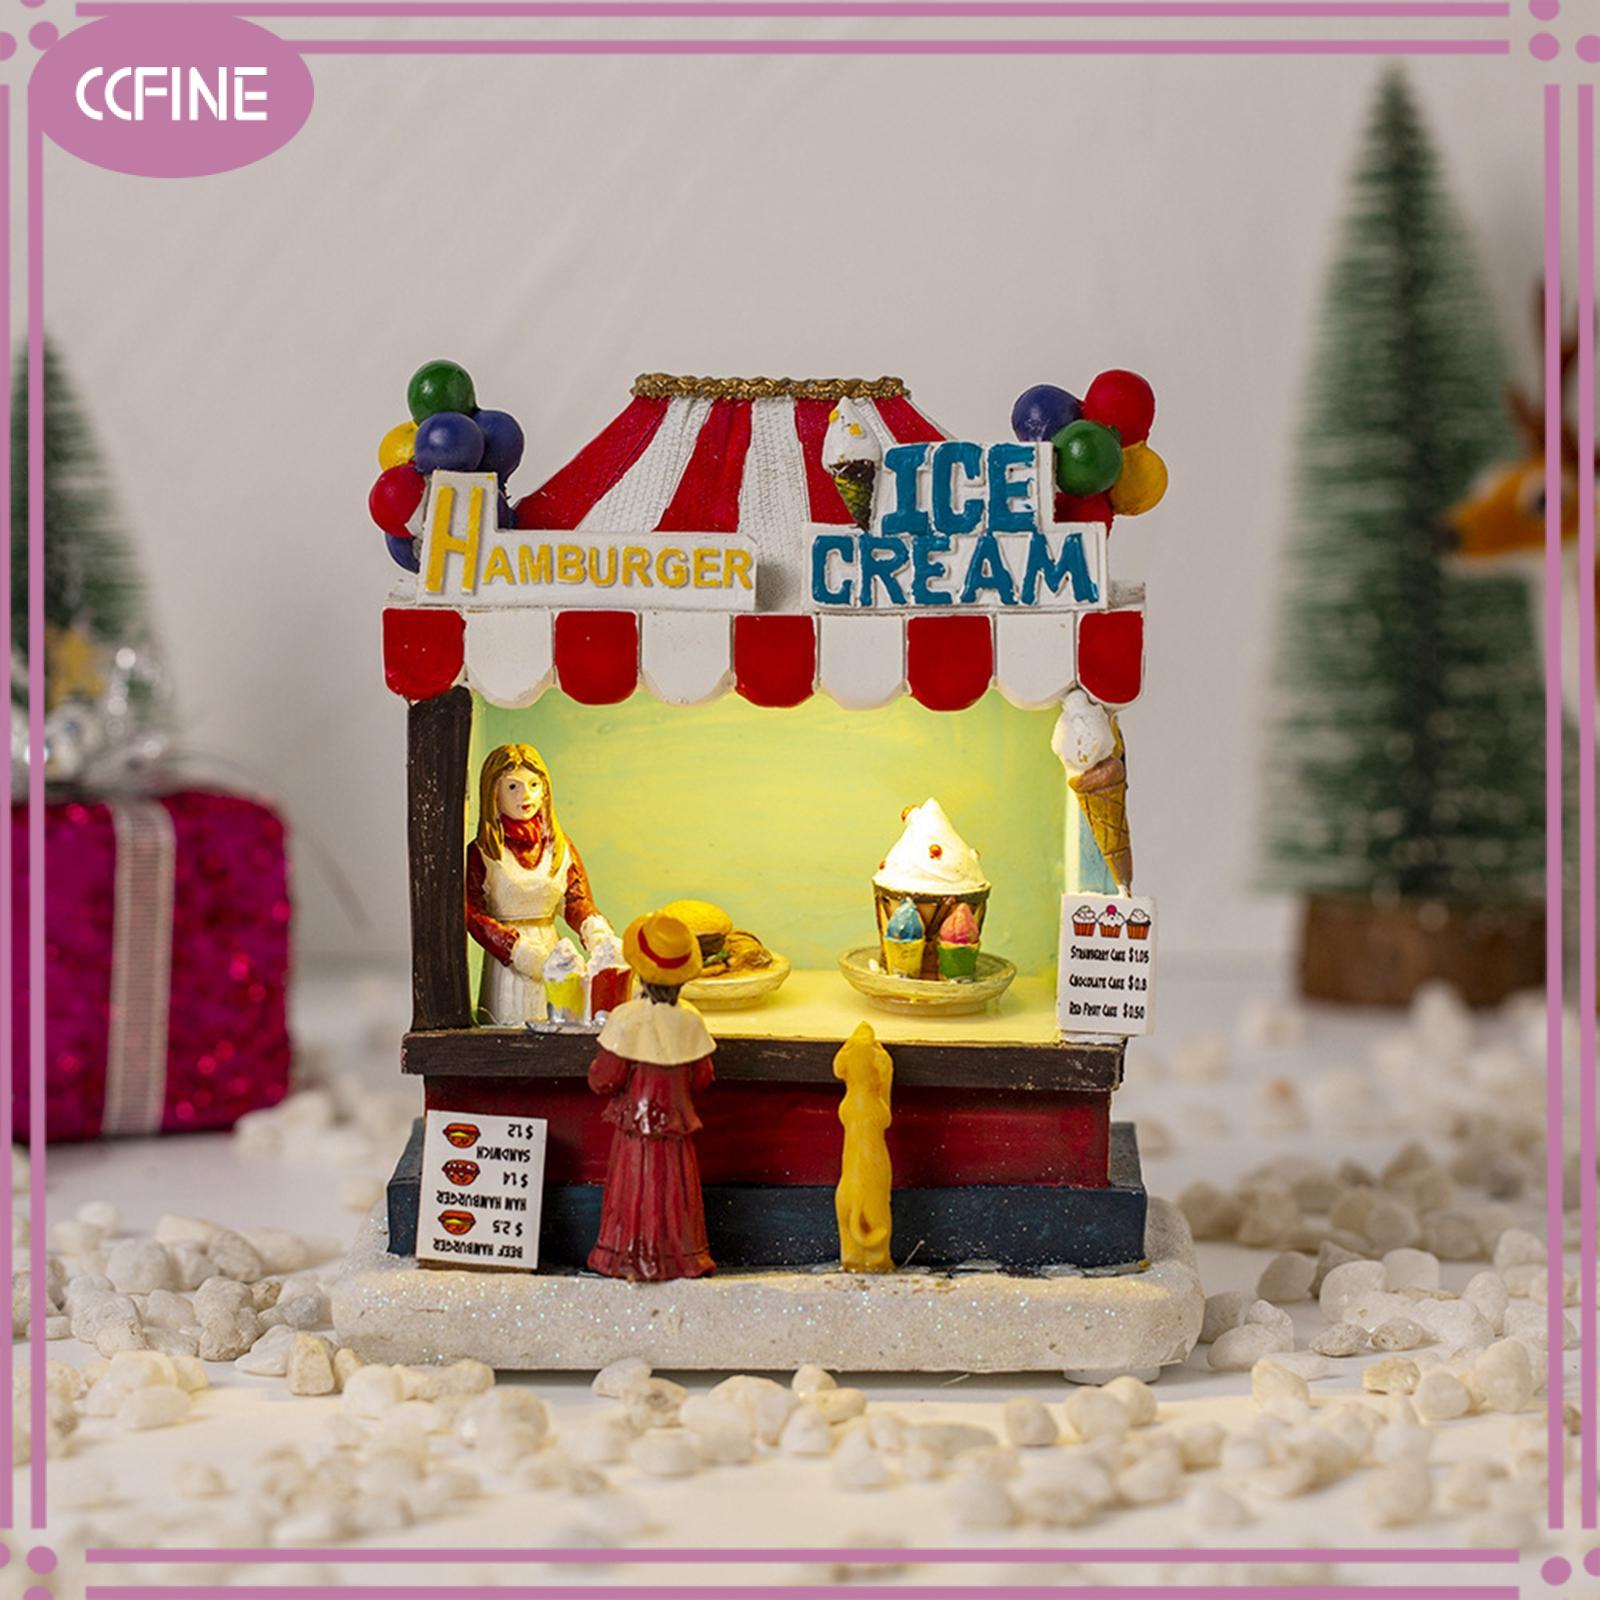 CCFine Ice Cream Small House, Musical Ornament Decorative Collectable